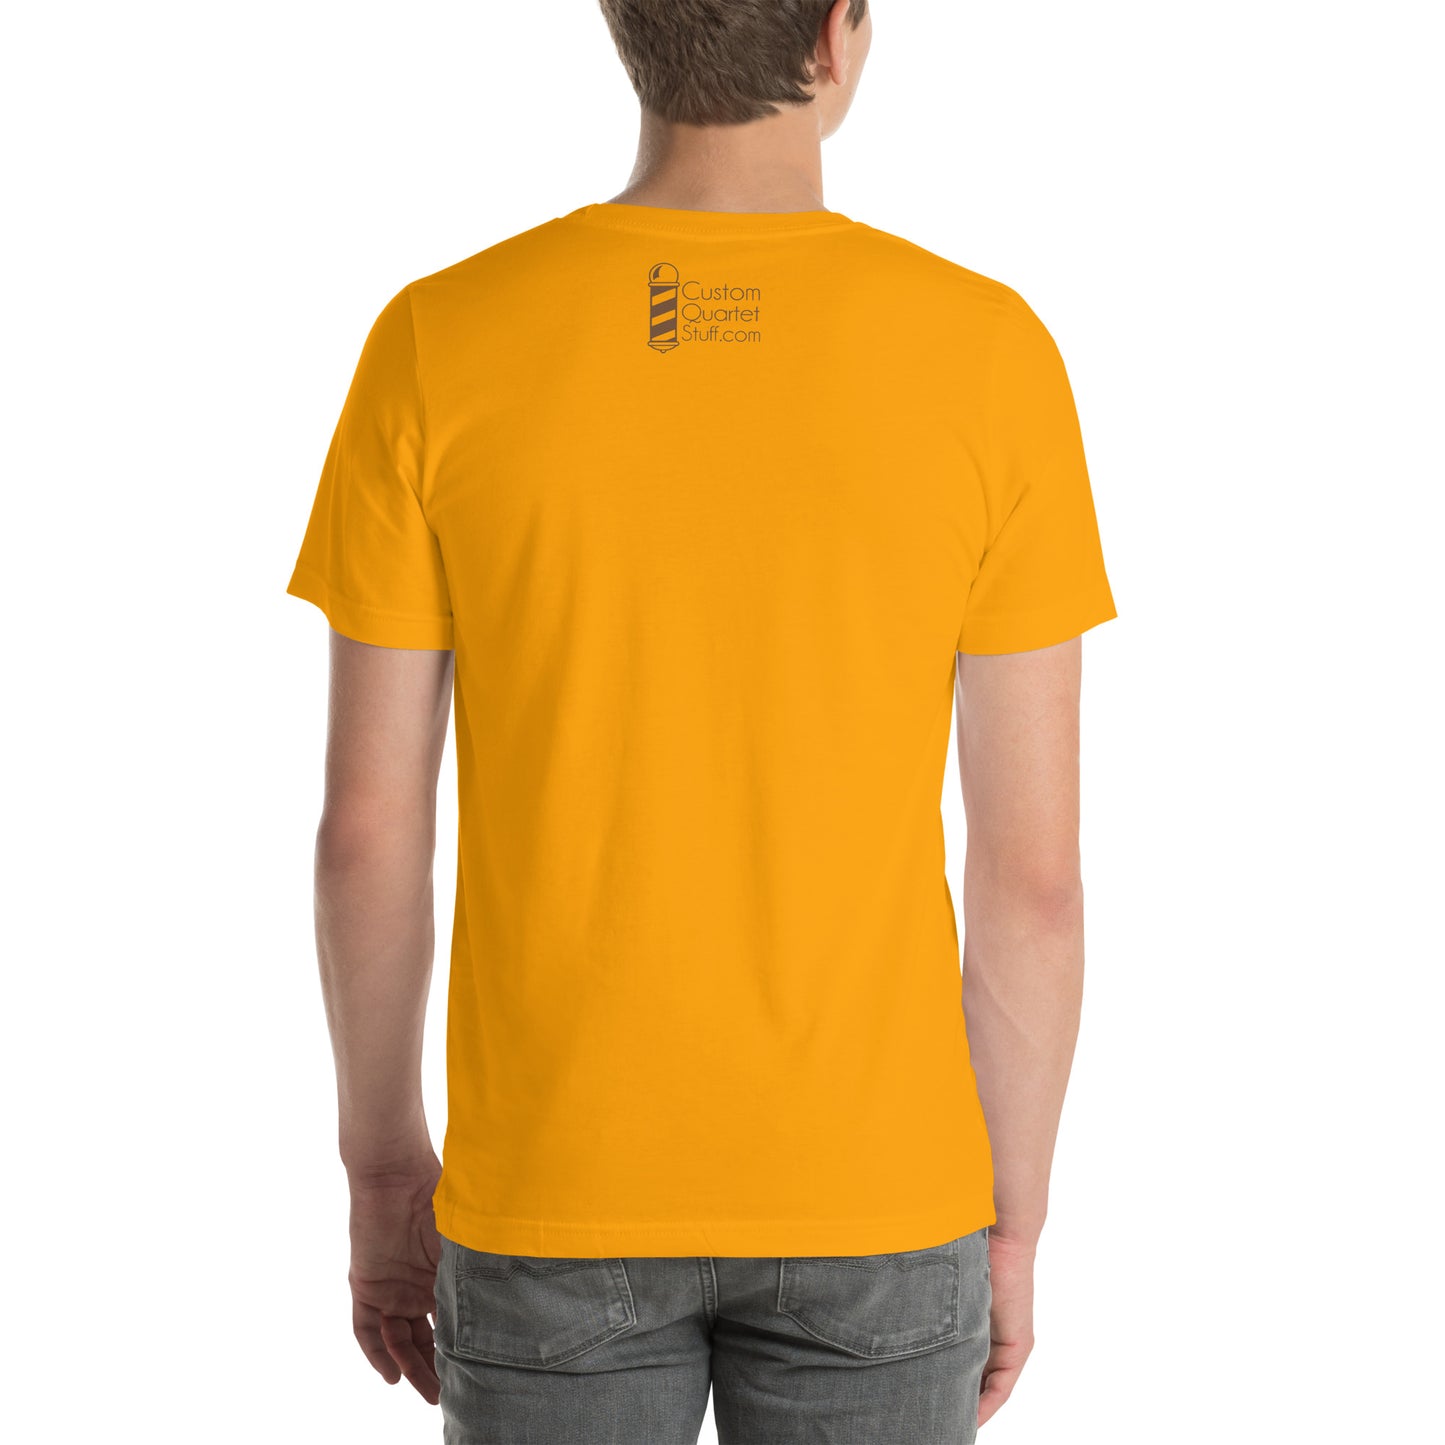 Comida Deluxe - Printed Unisex t-shirt